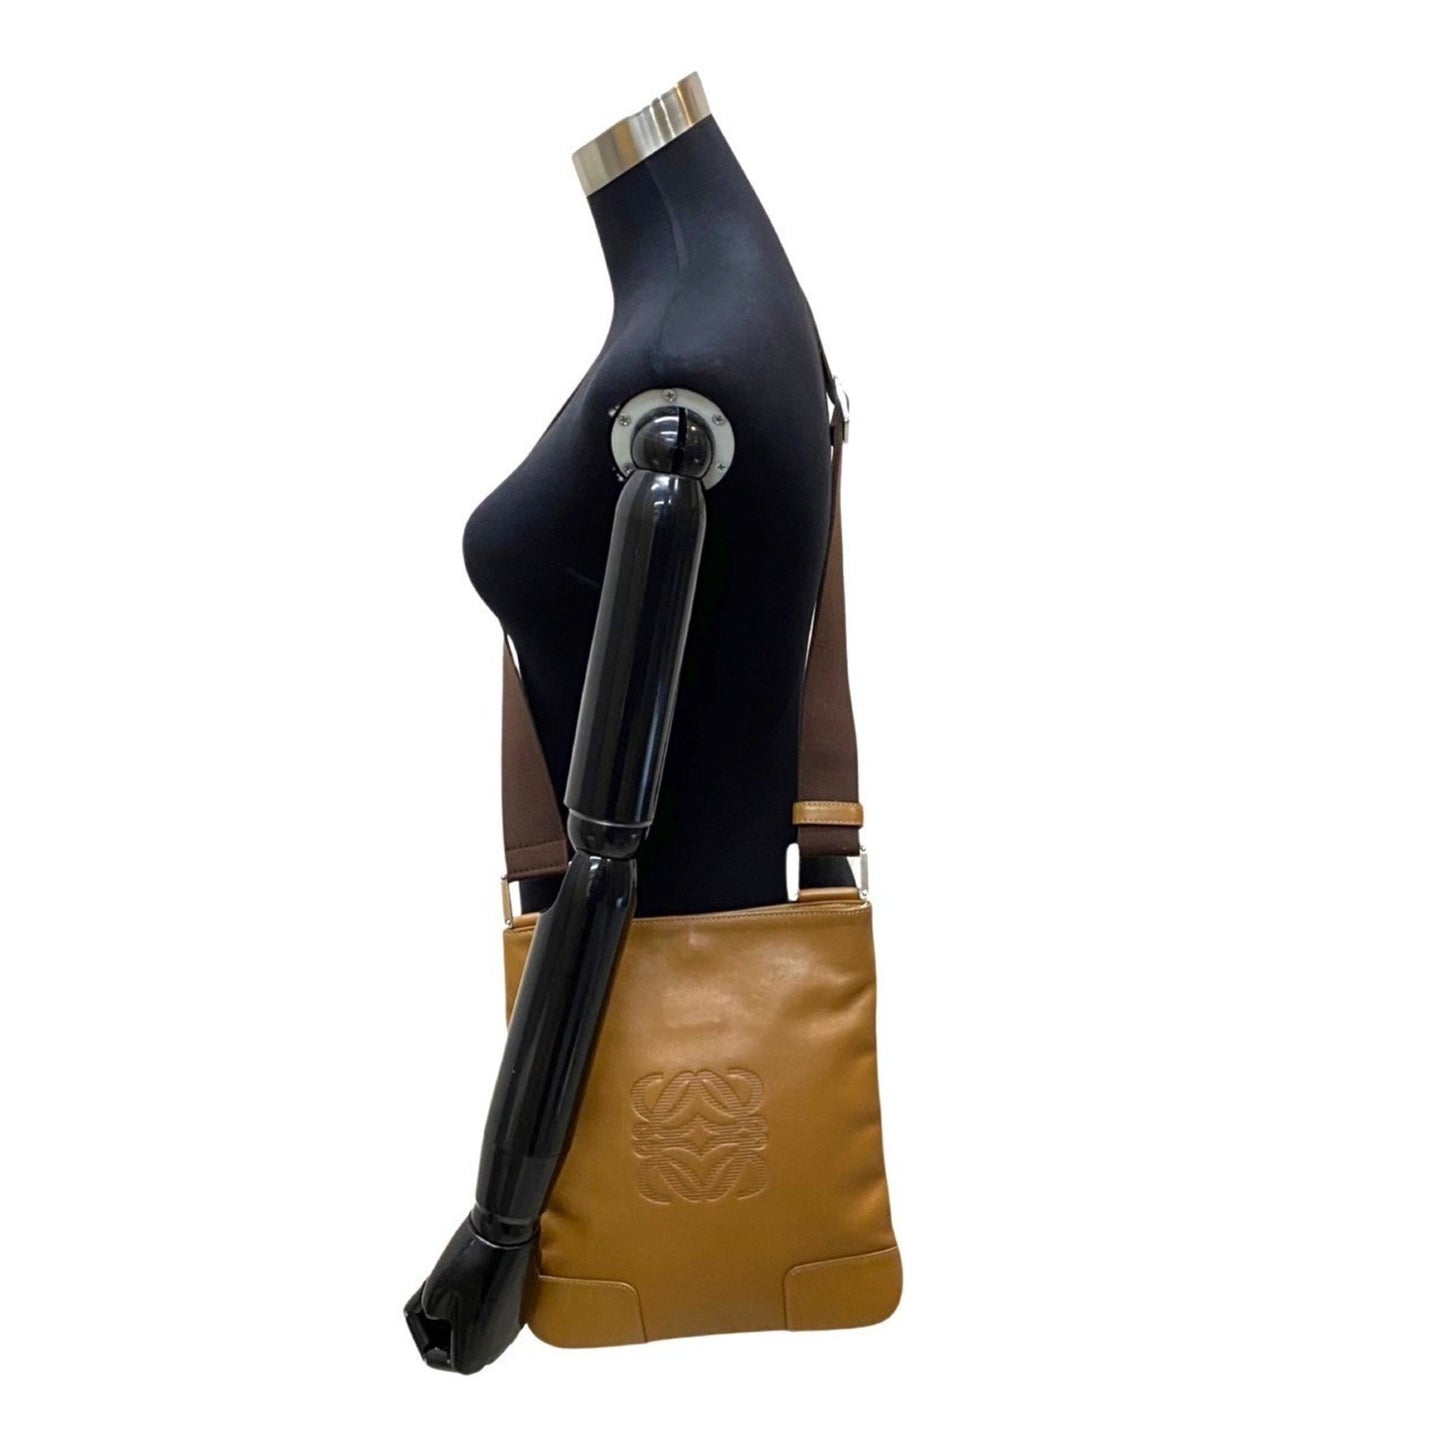 Loewe Women's Sophisticated Beige Leather Shoulder Bag in Beige